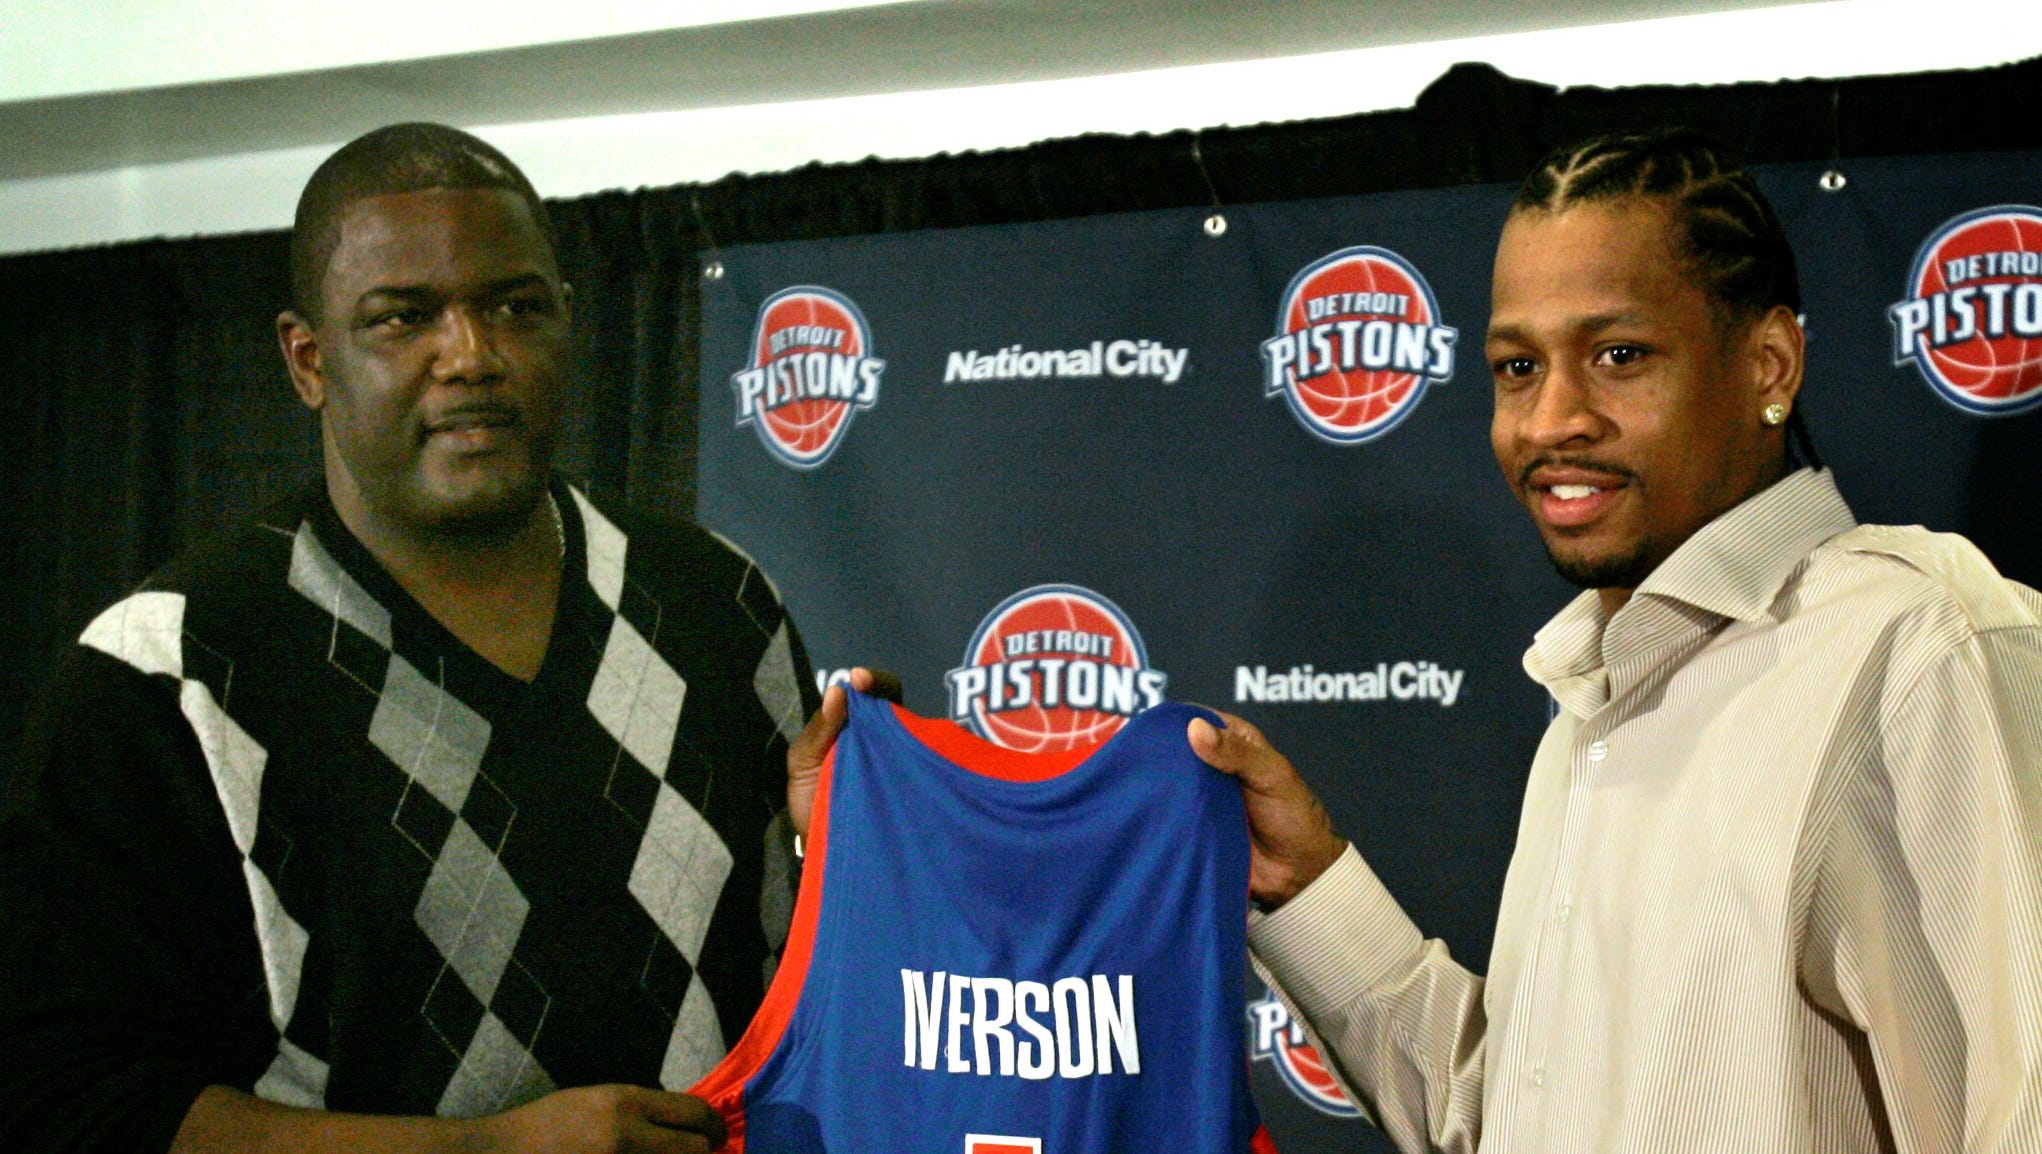 Tres voz dolor de muelas Allen Iverson welcomed by Detroit Pistons